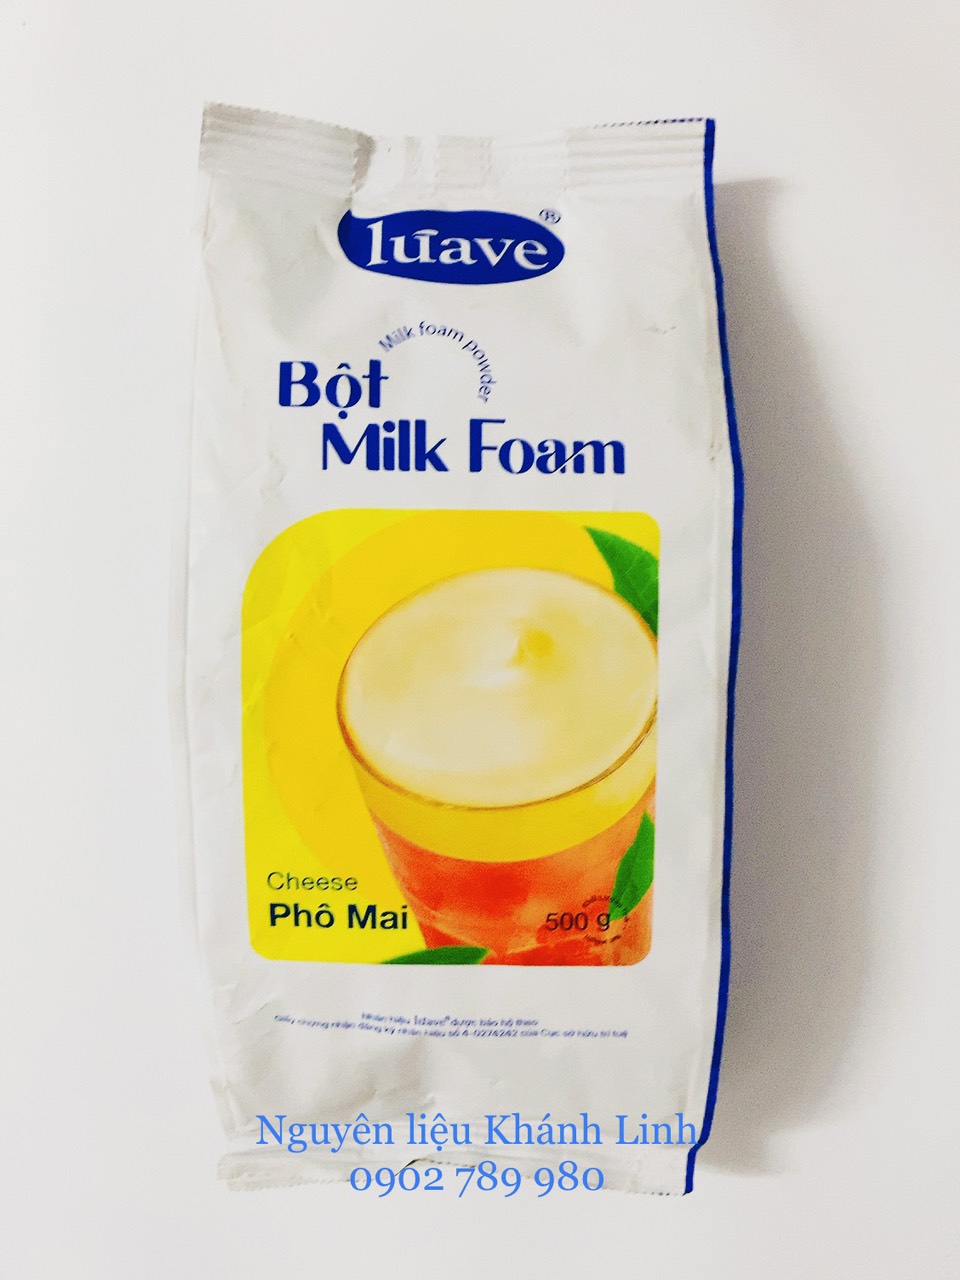 Bột Milk Foam Phô Mail Luave 500g